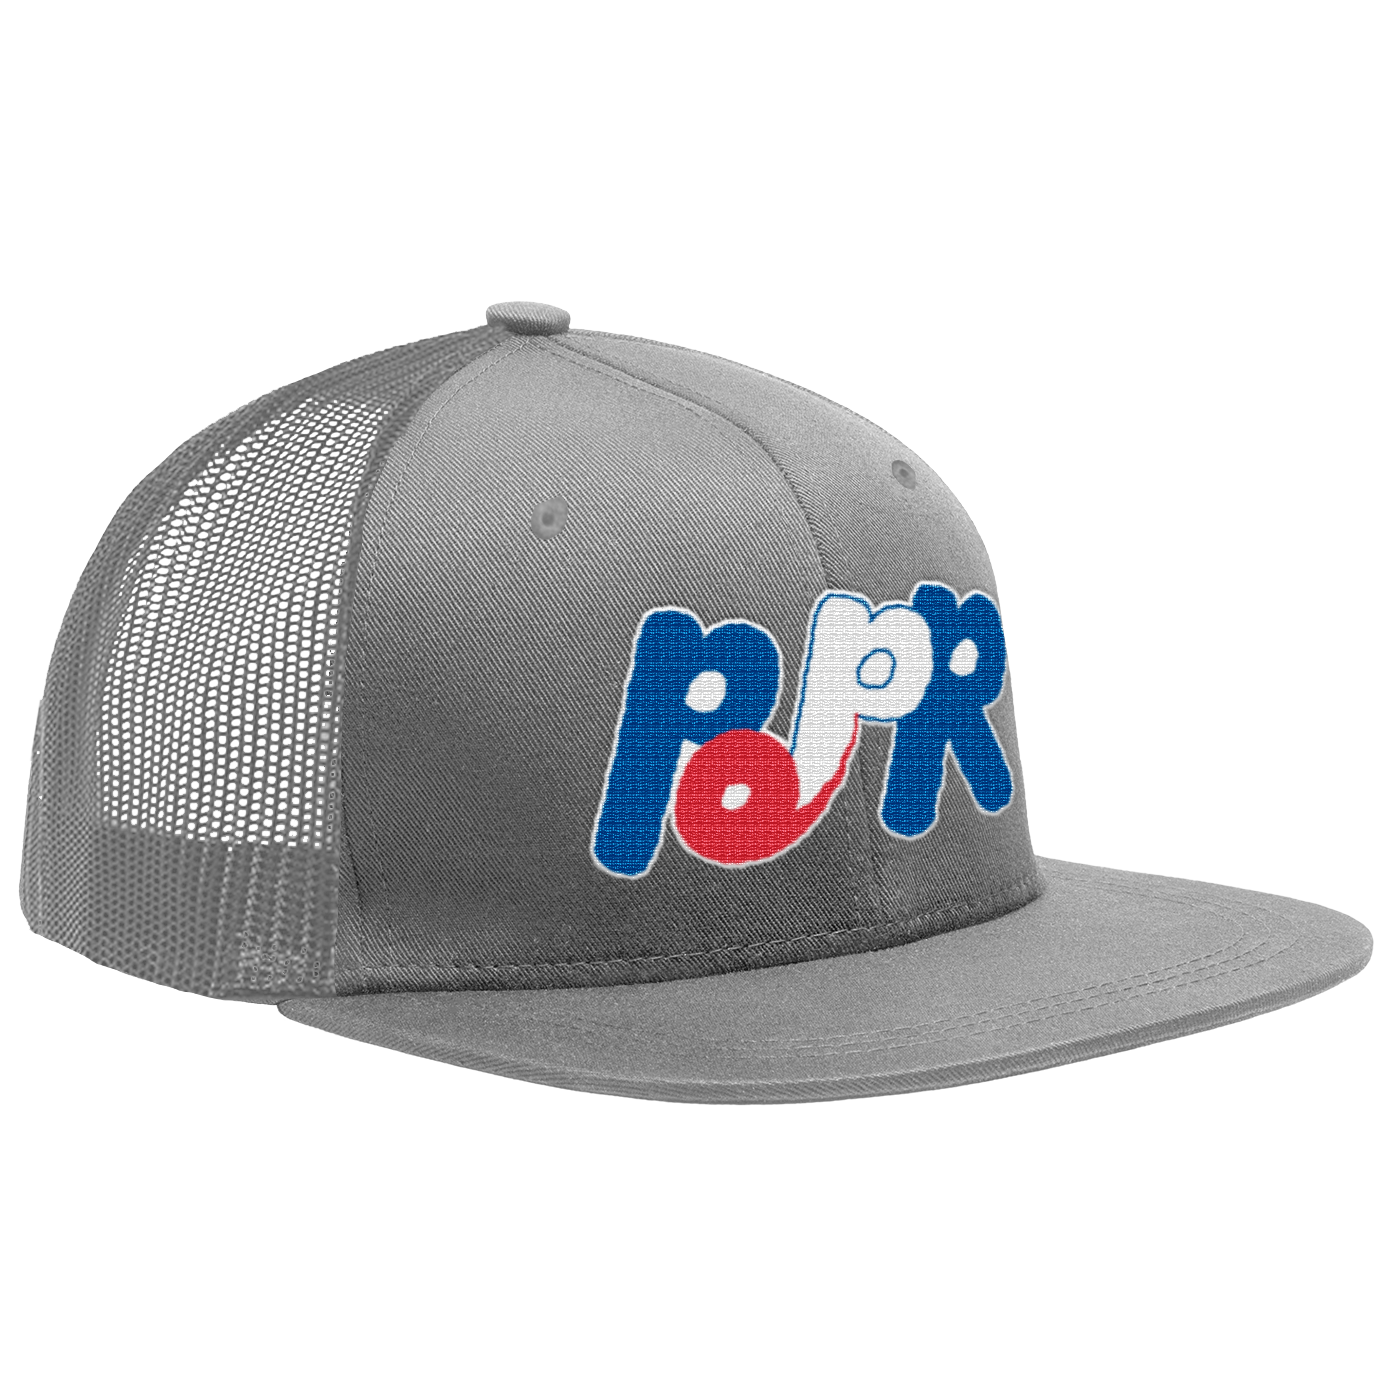 POPR Records - "Expos Logo" (Silver) (Trucker Cap)